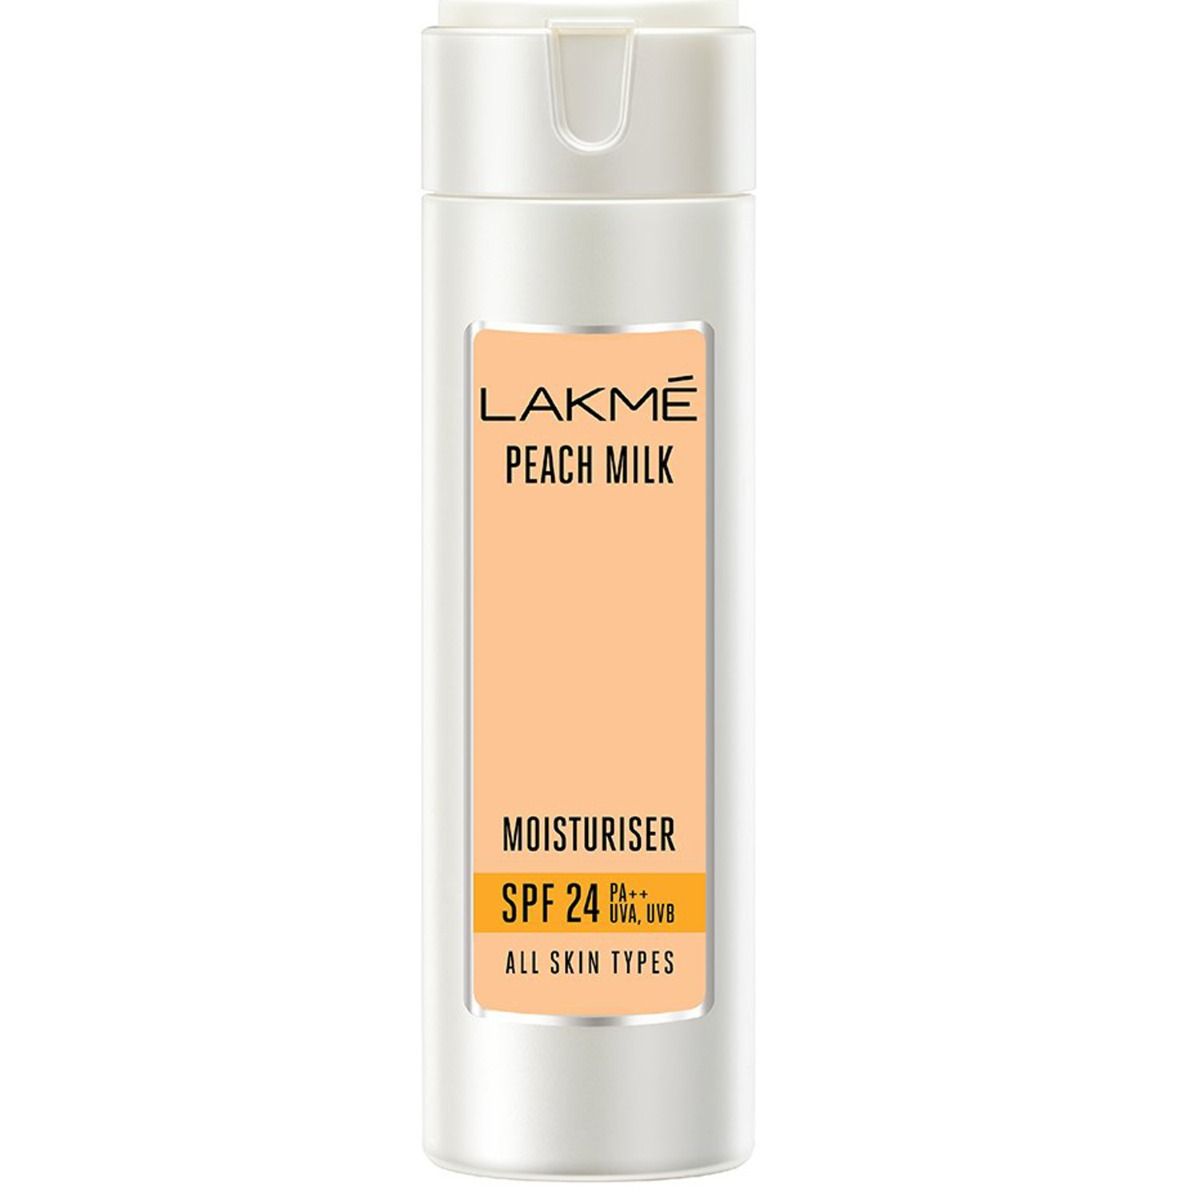 Lakme Peach Milk Moisturizer SPF 24 PA Sunscreen Lotion 120 ml, Pack of 1 